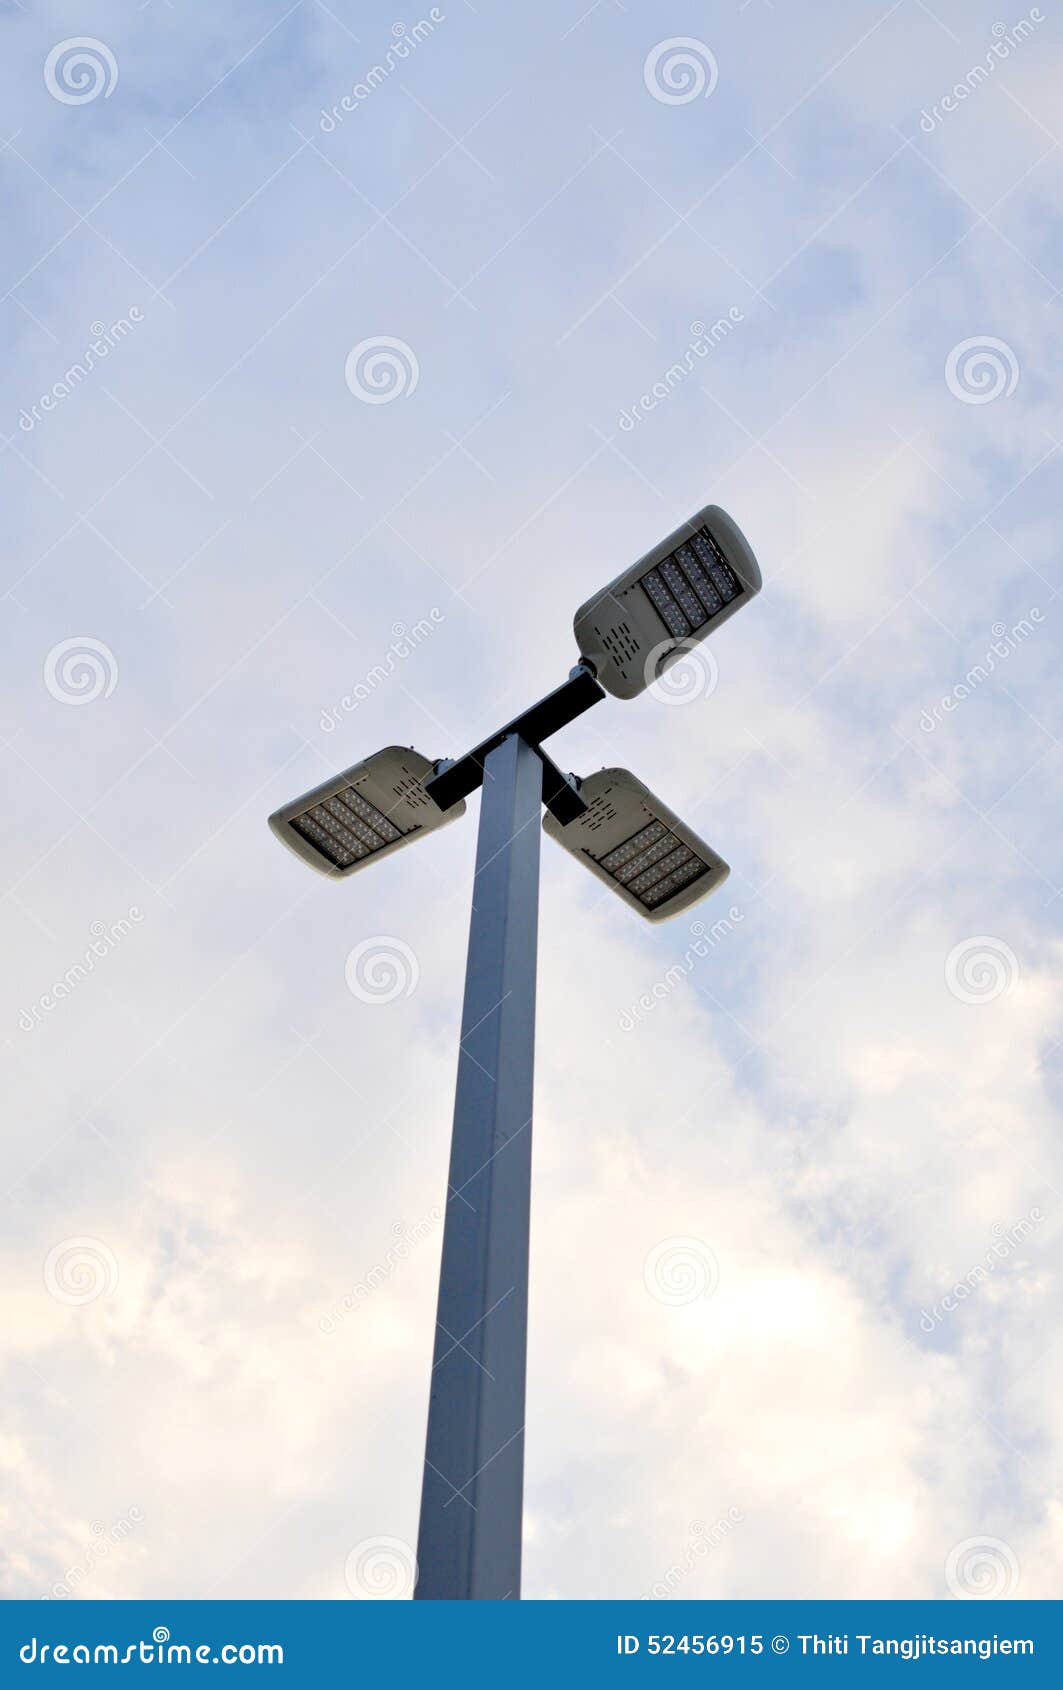 Solar street light stock image. Image of street, electric - 52456915